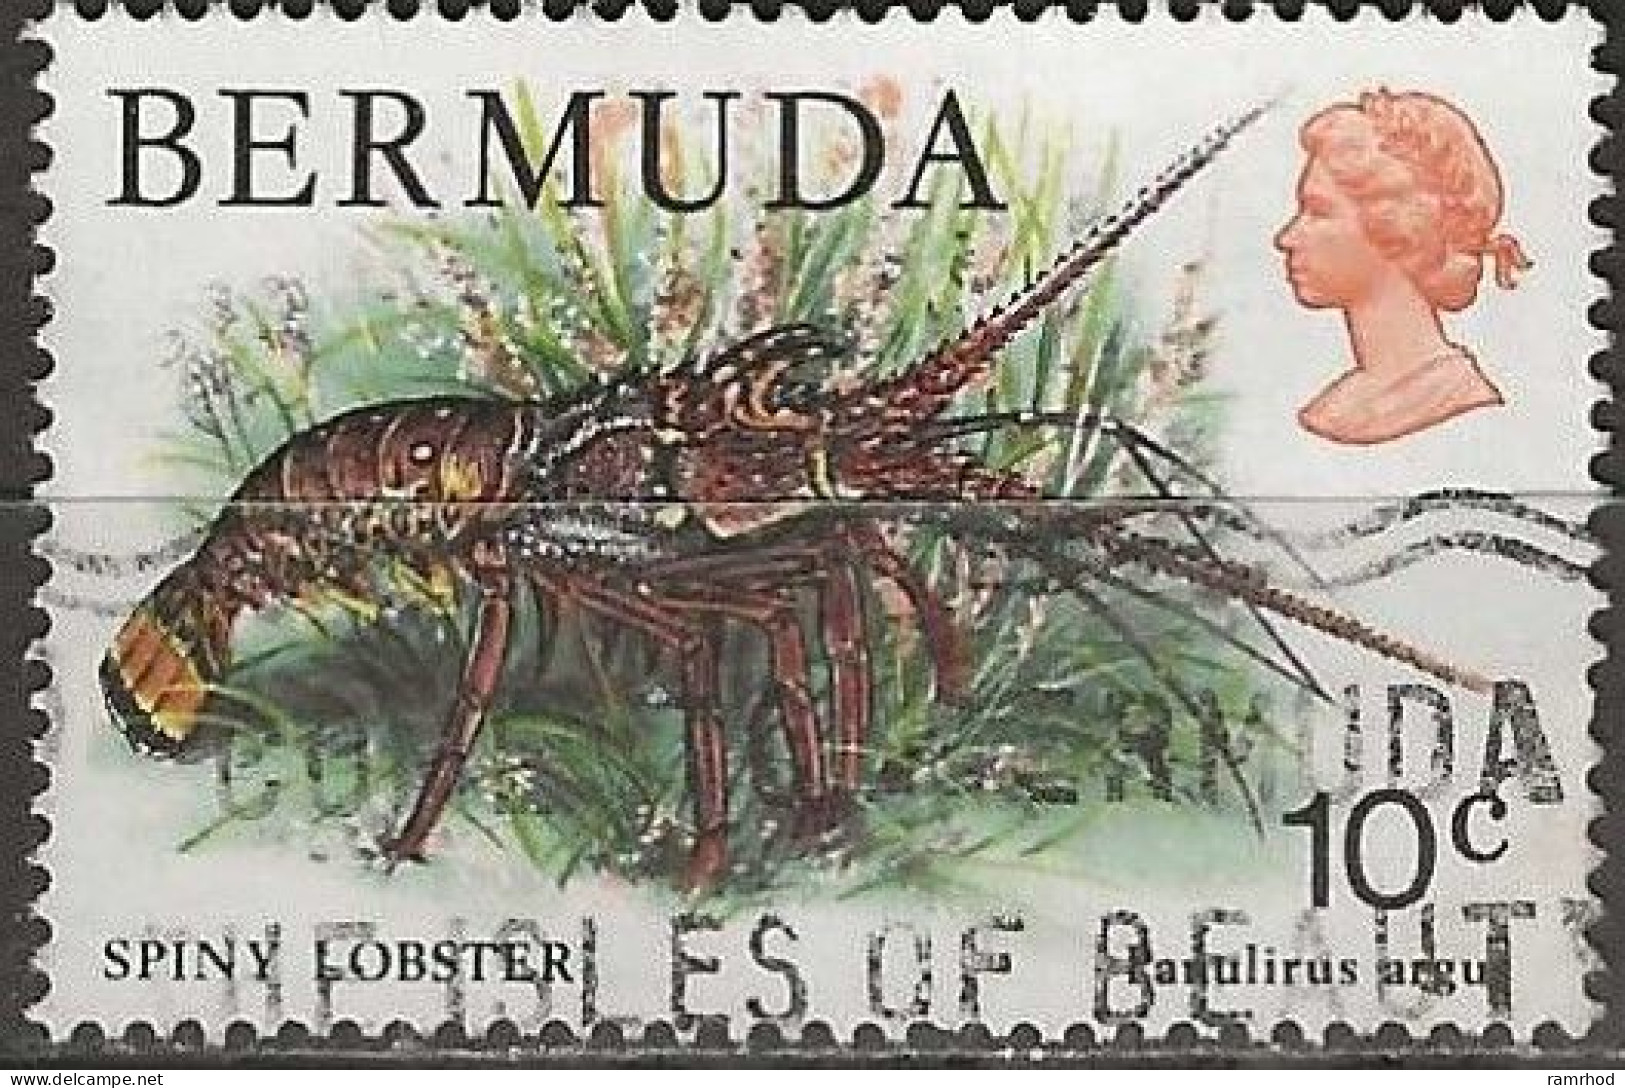 BERMUDA 1978 Wildlife - 10c. - Spiny Lobster AVU - Bermuda